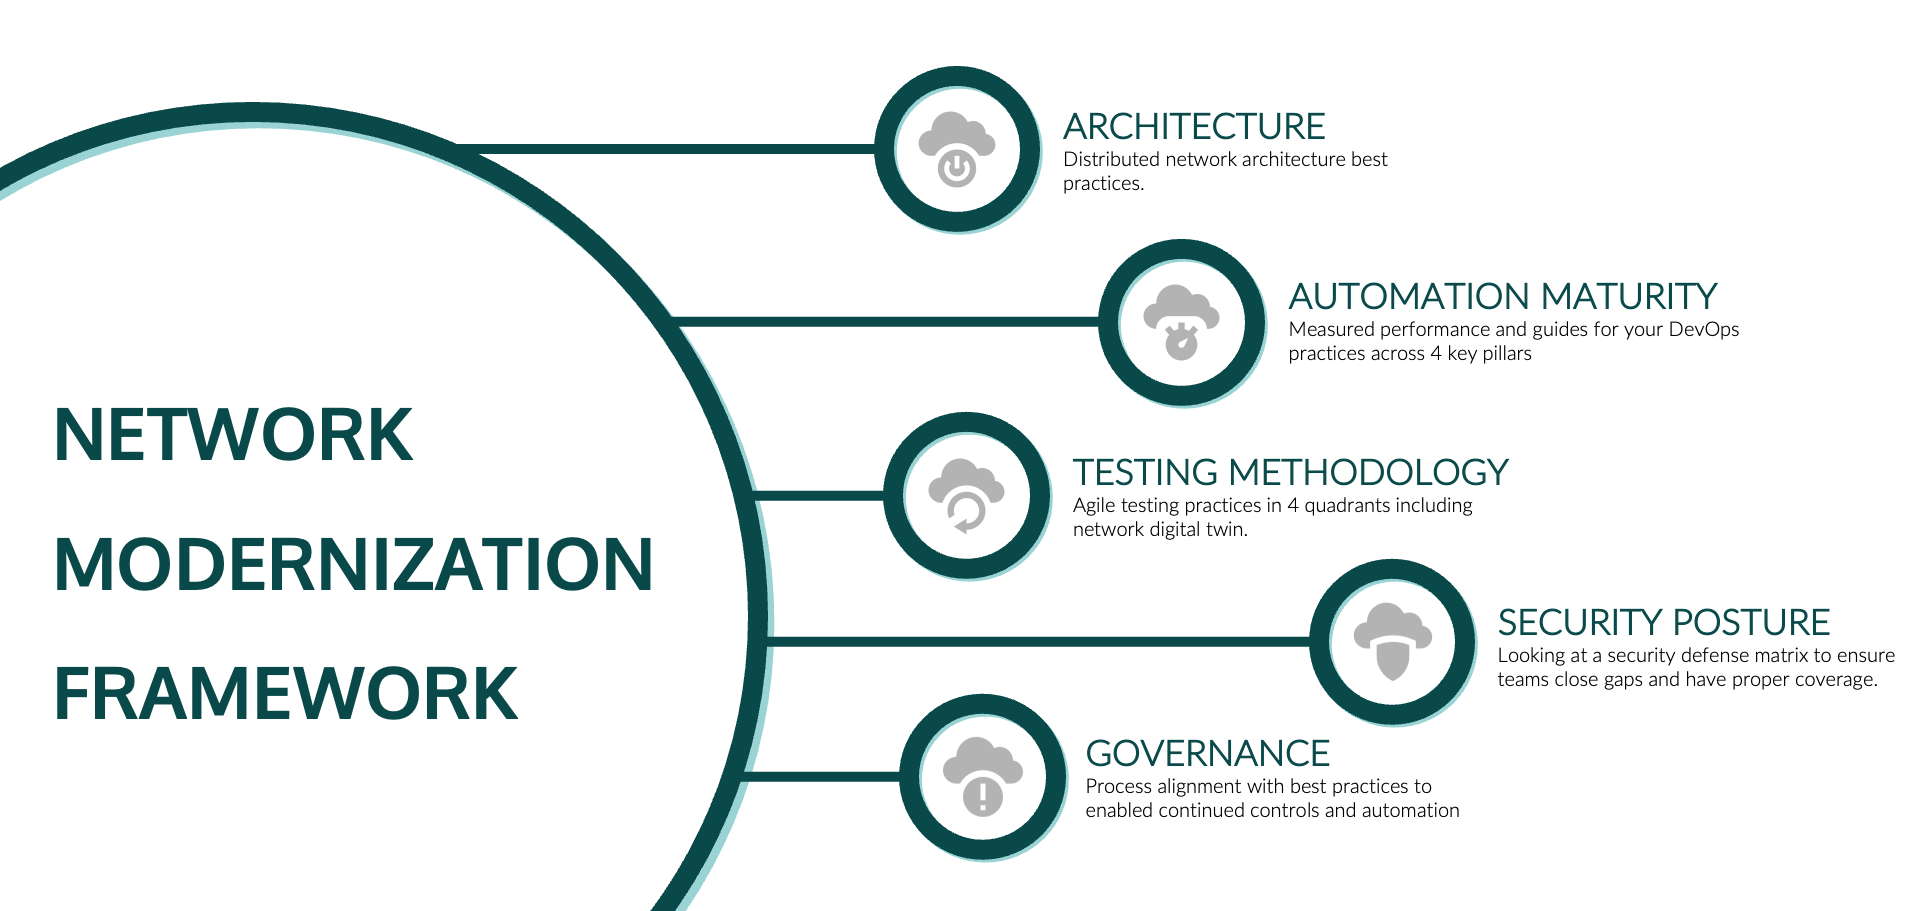 Asperitas Consulting Network Modernization Framework